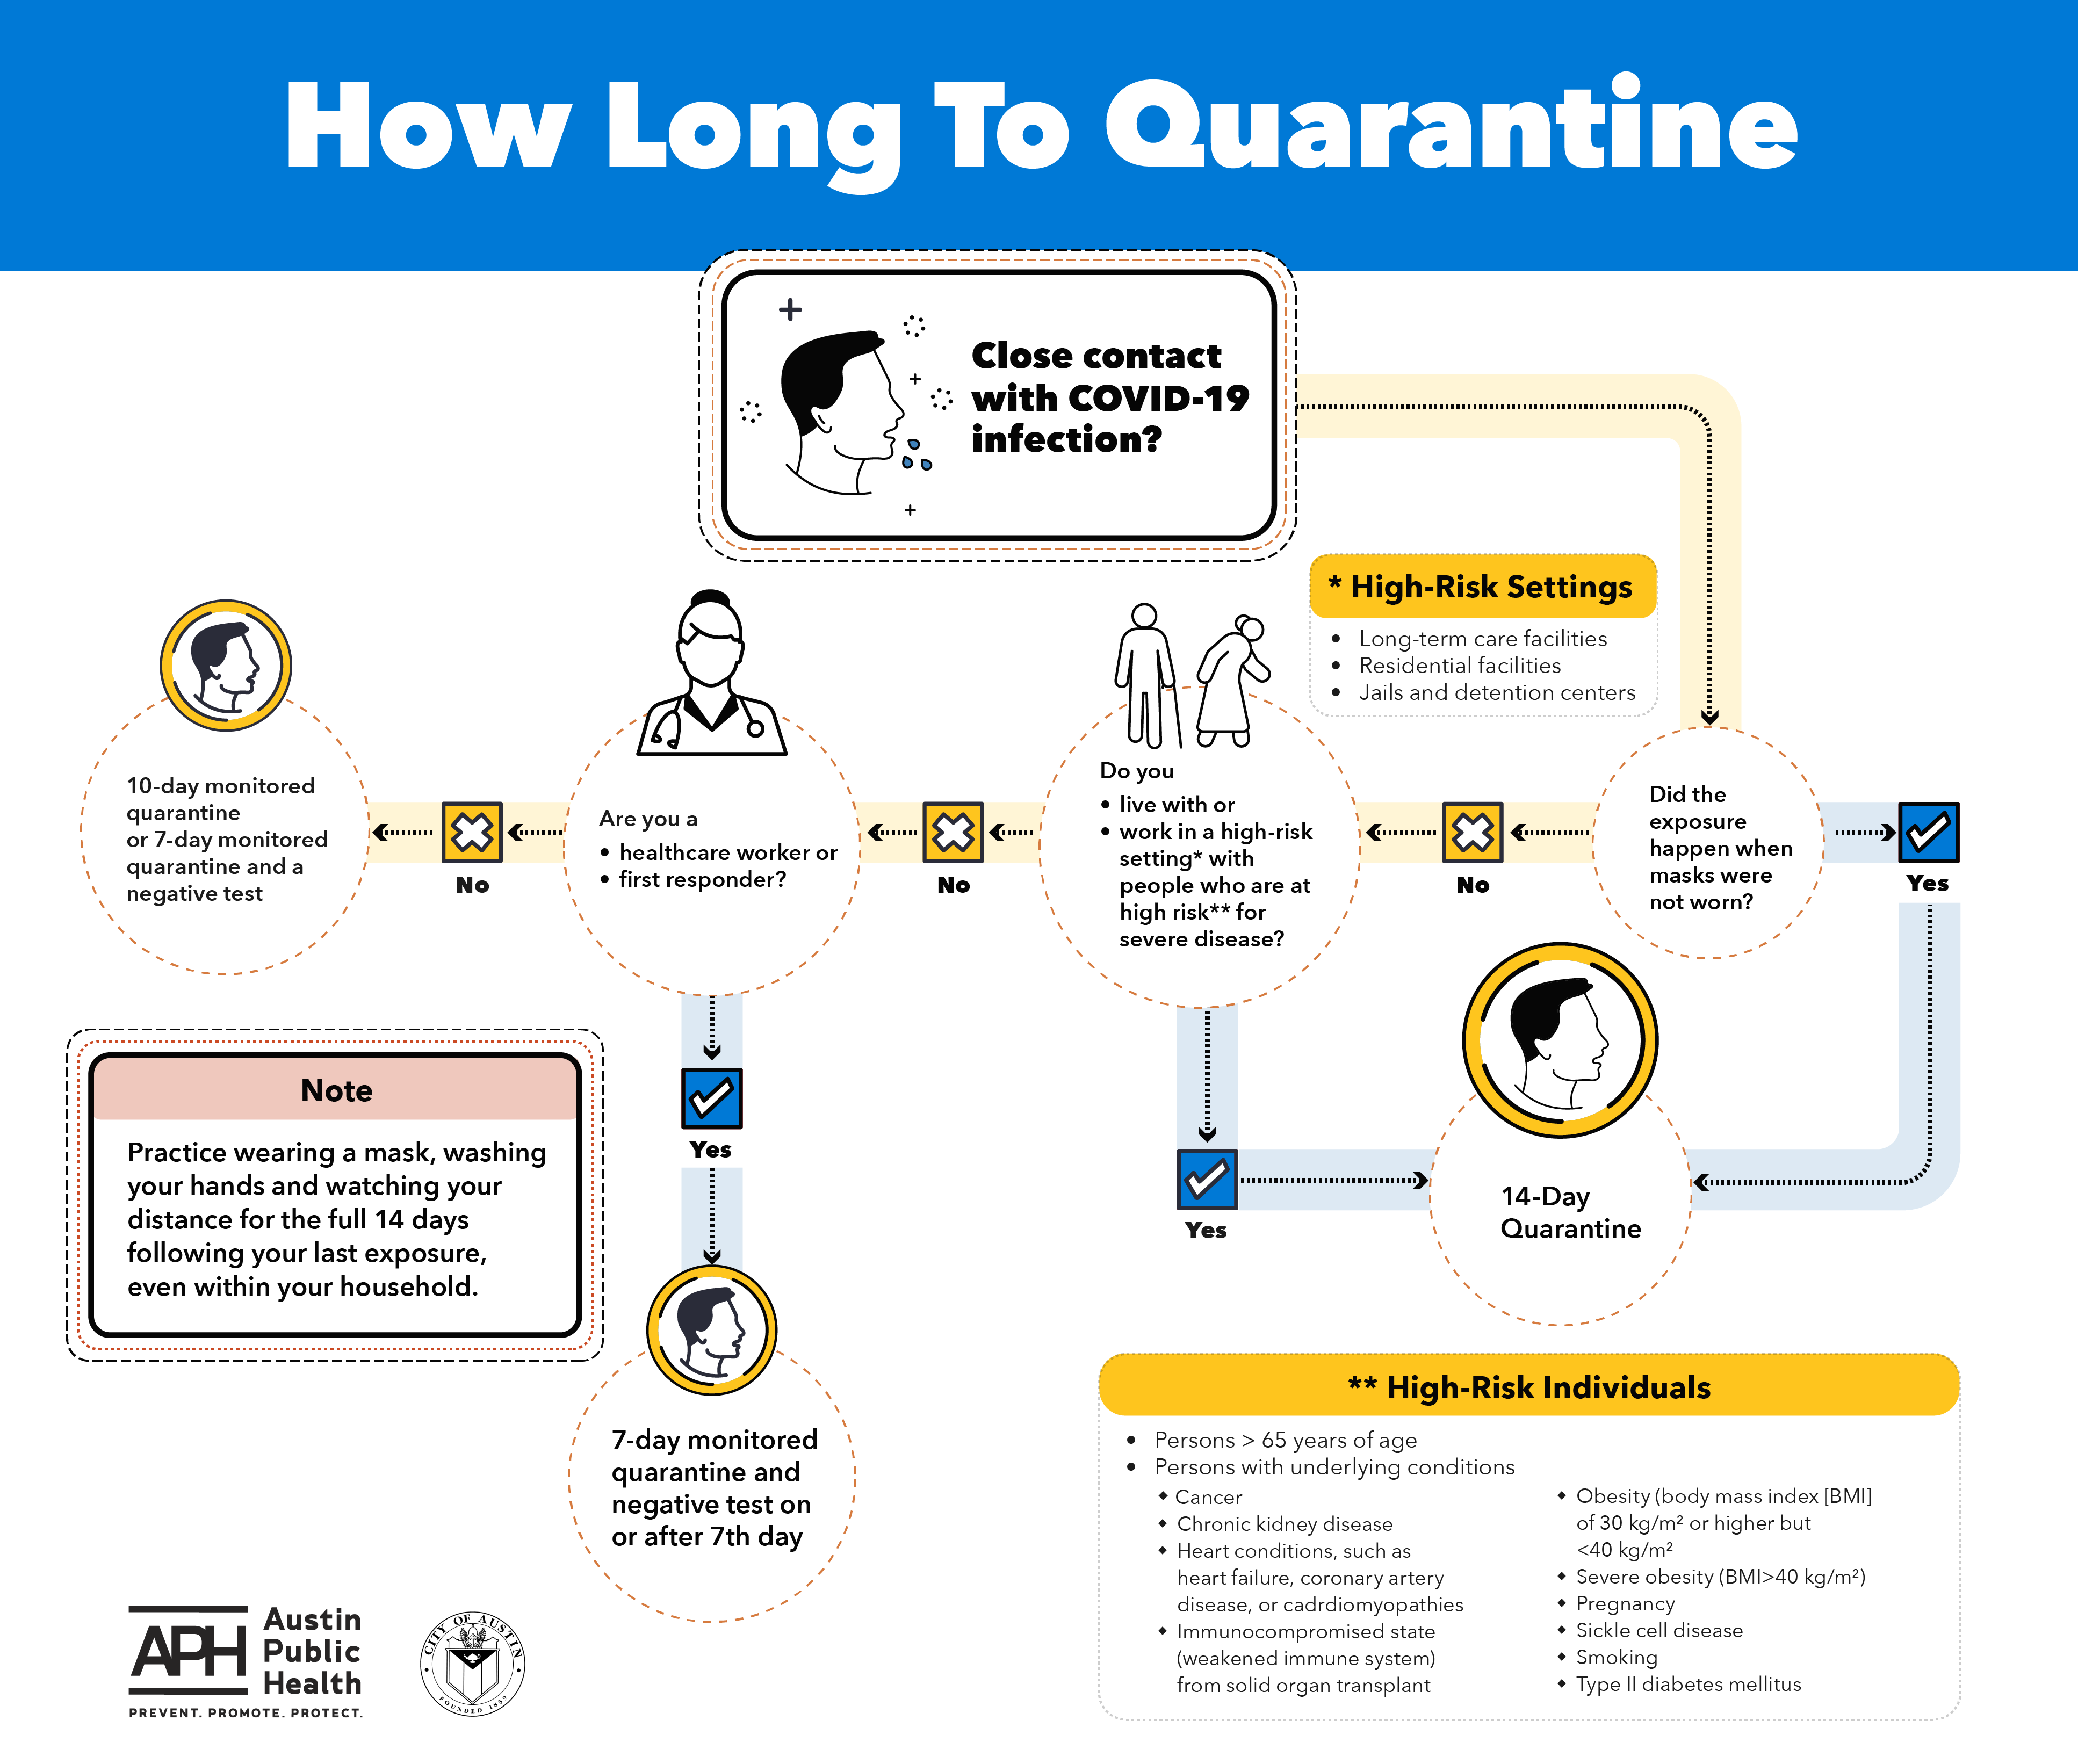 How Long to Quarantine image flowchart